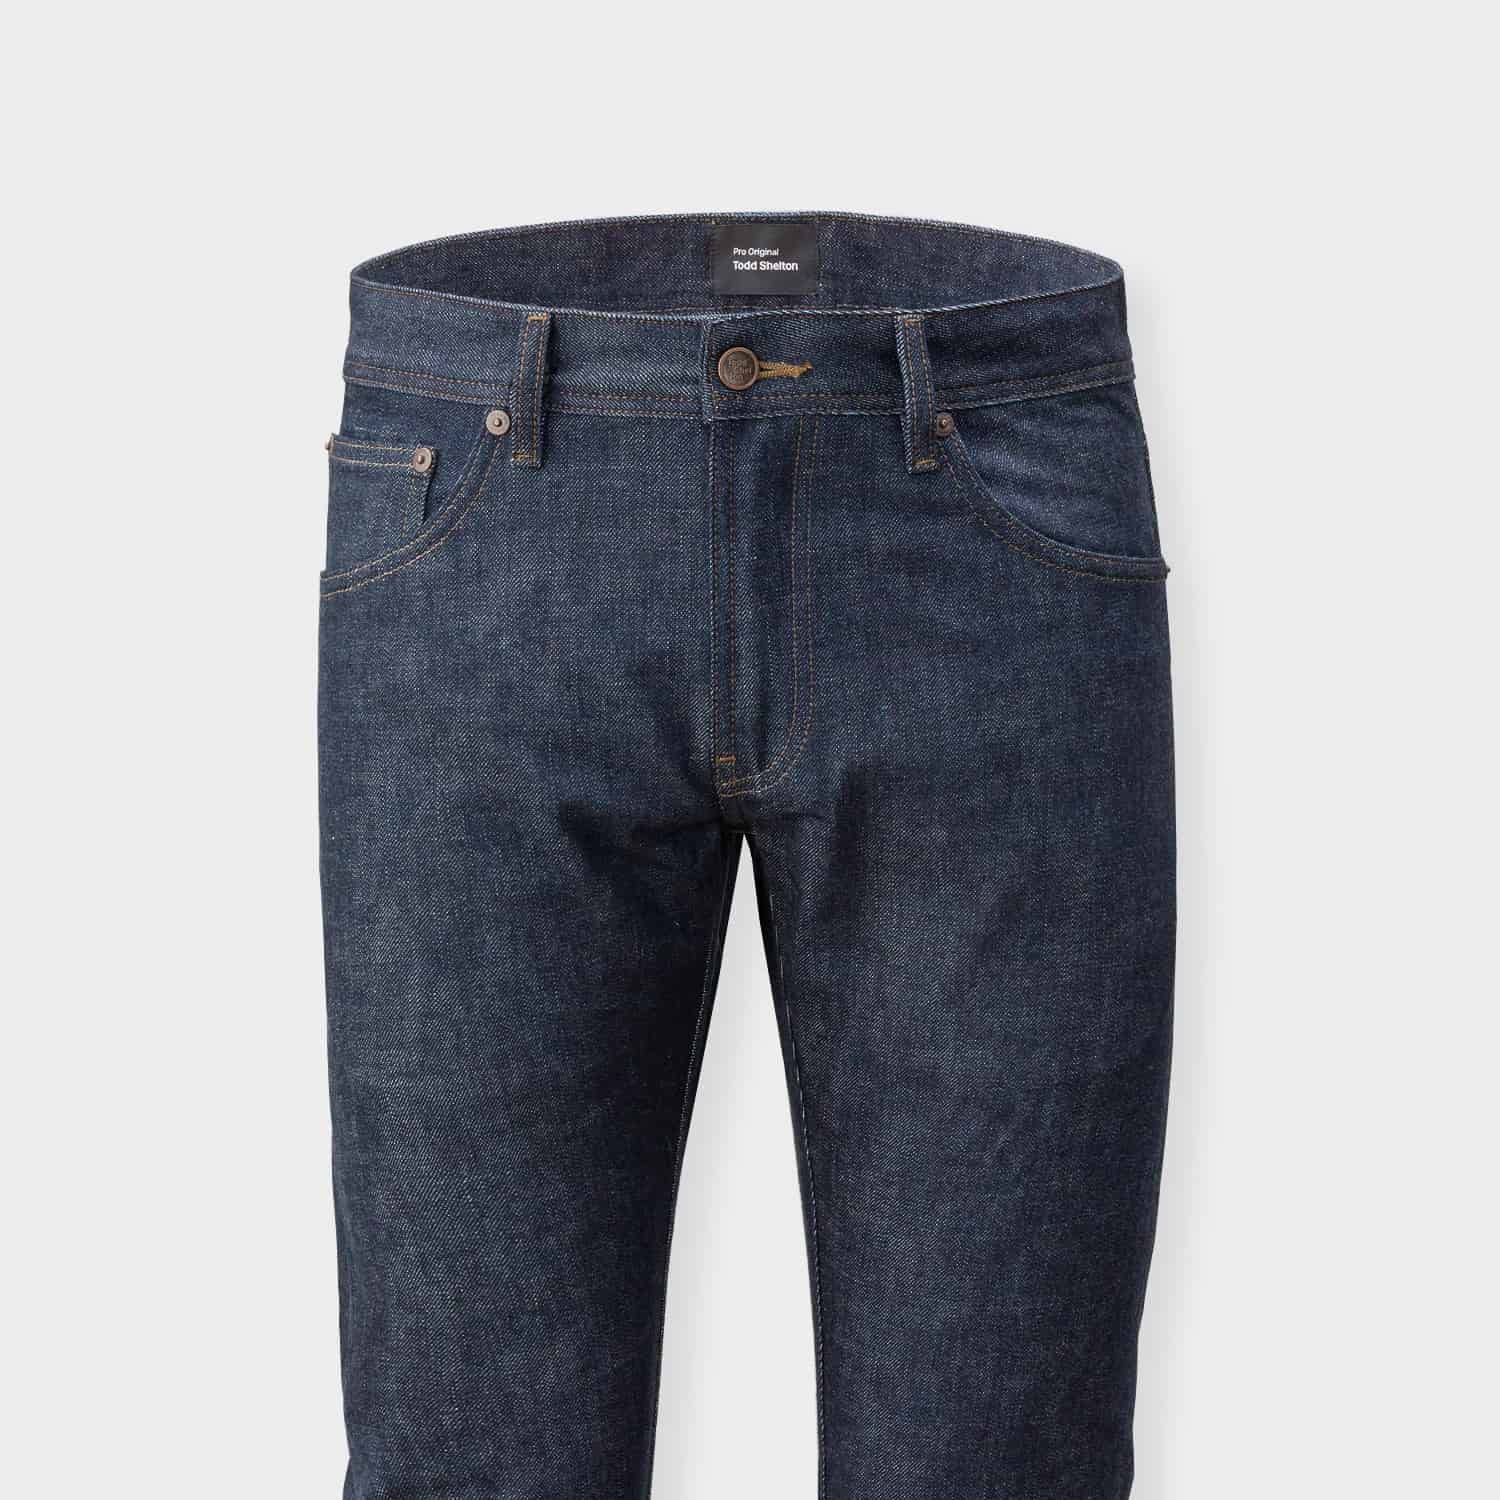 Buy Men Cream Dark Wash Low Skinny Fit Jeans Online  699995  Peter England